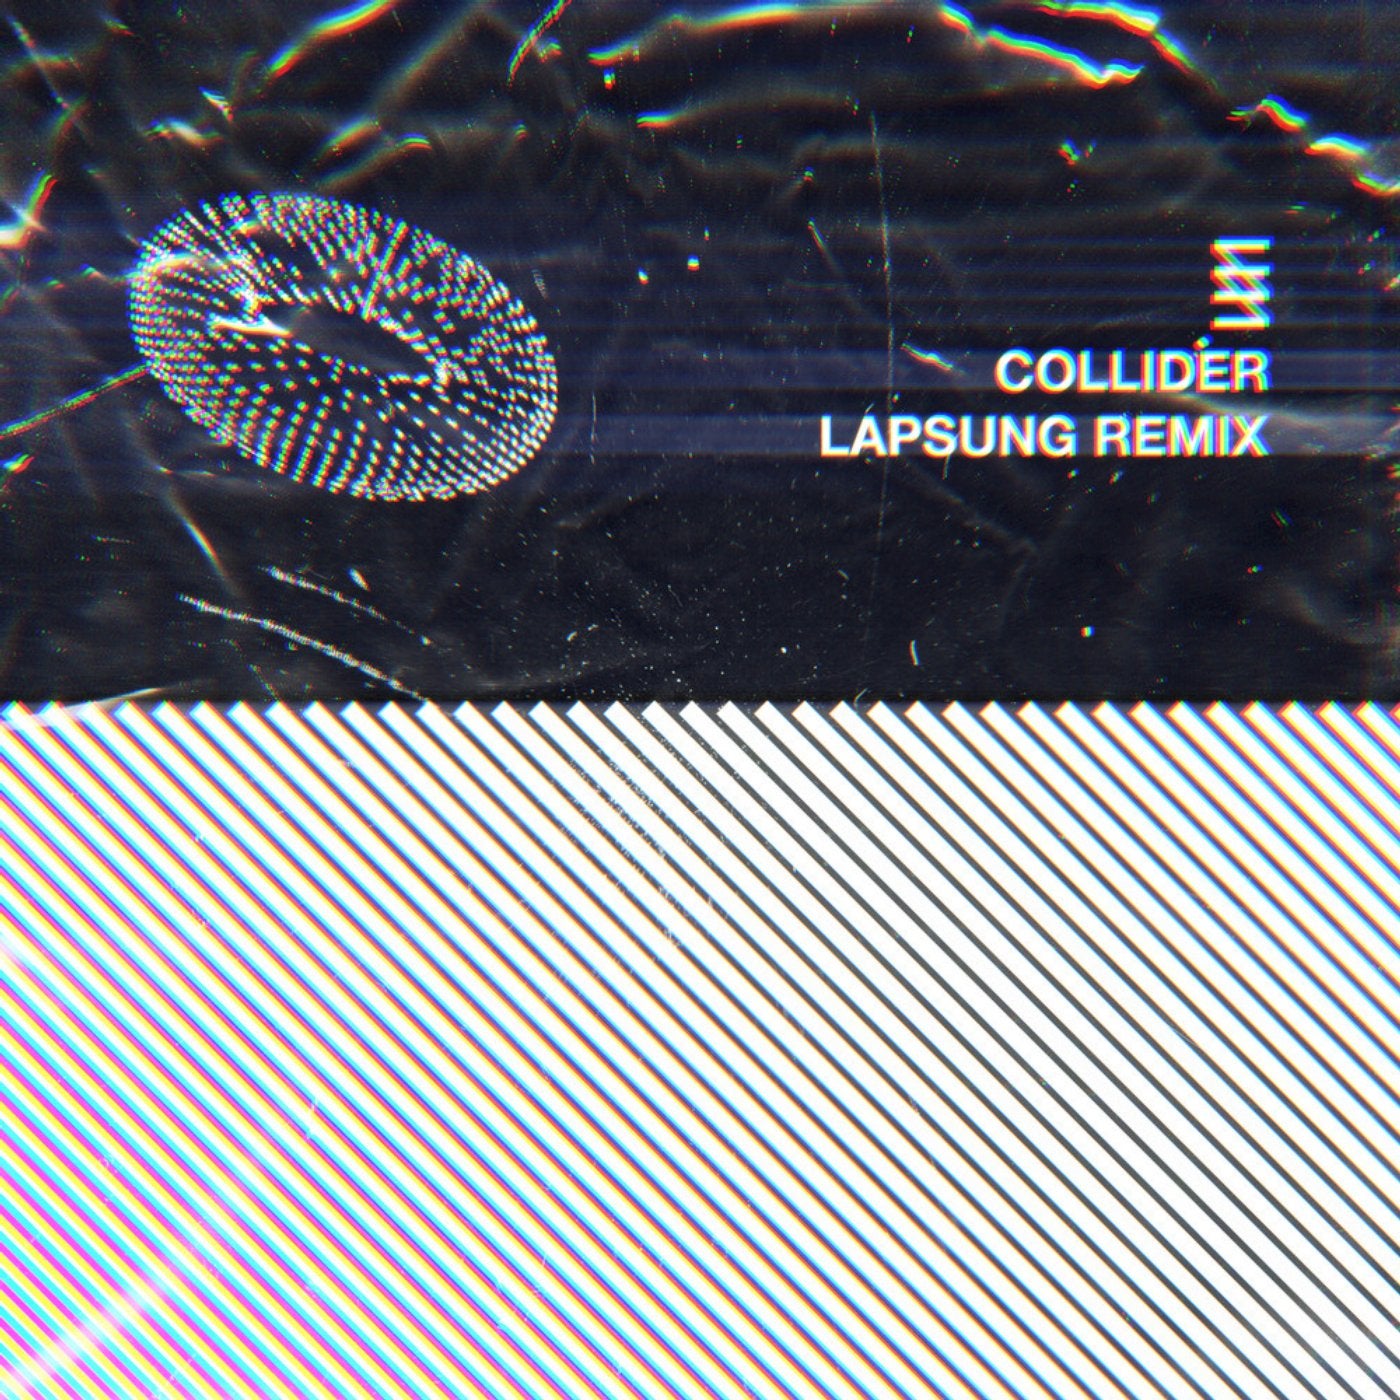 COLLIDER (Lapsung Remix)